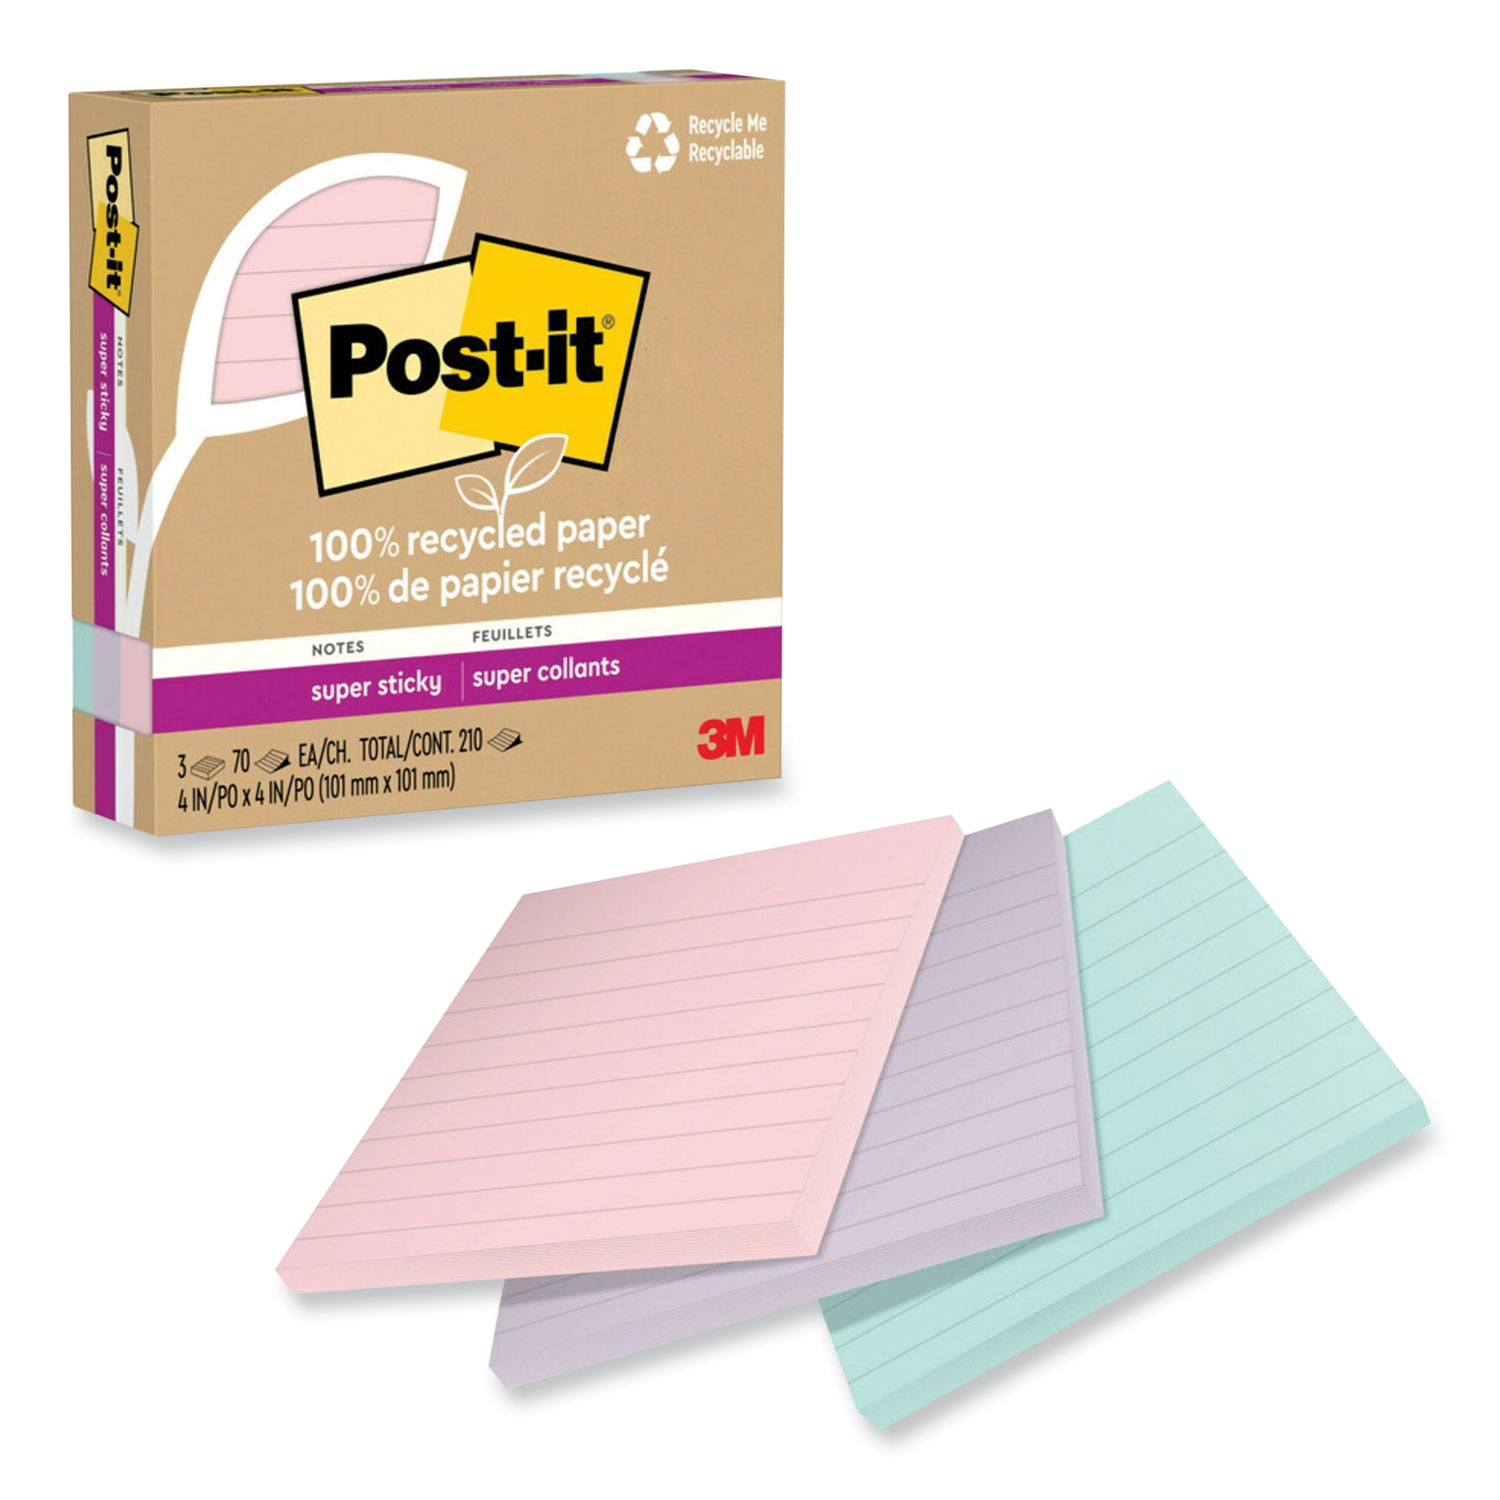 Post-It Post-it Super Sticky 4 x 6 List Notes, 24PK